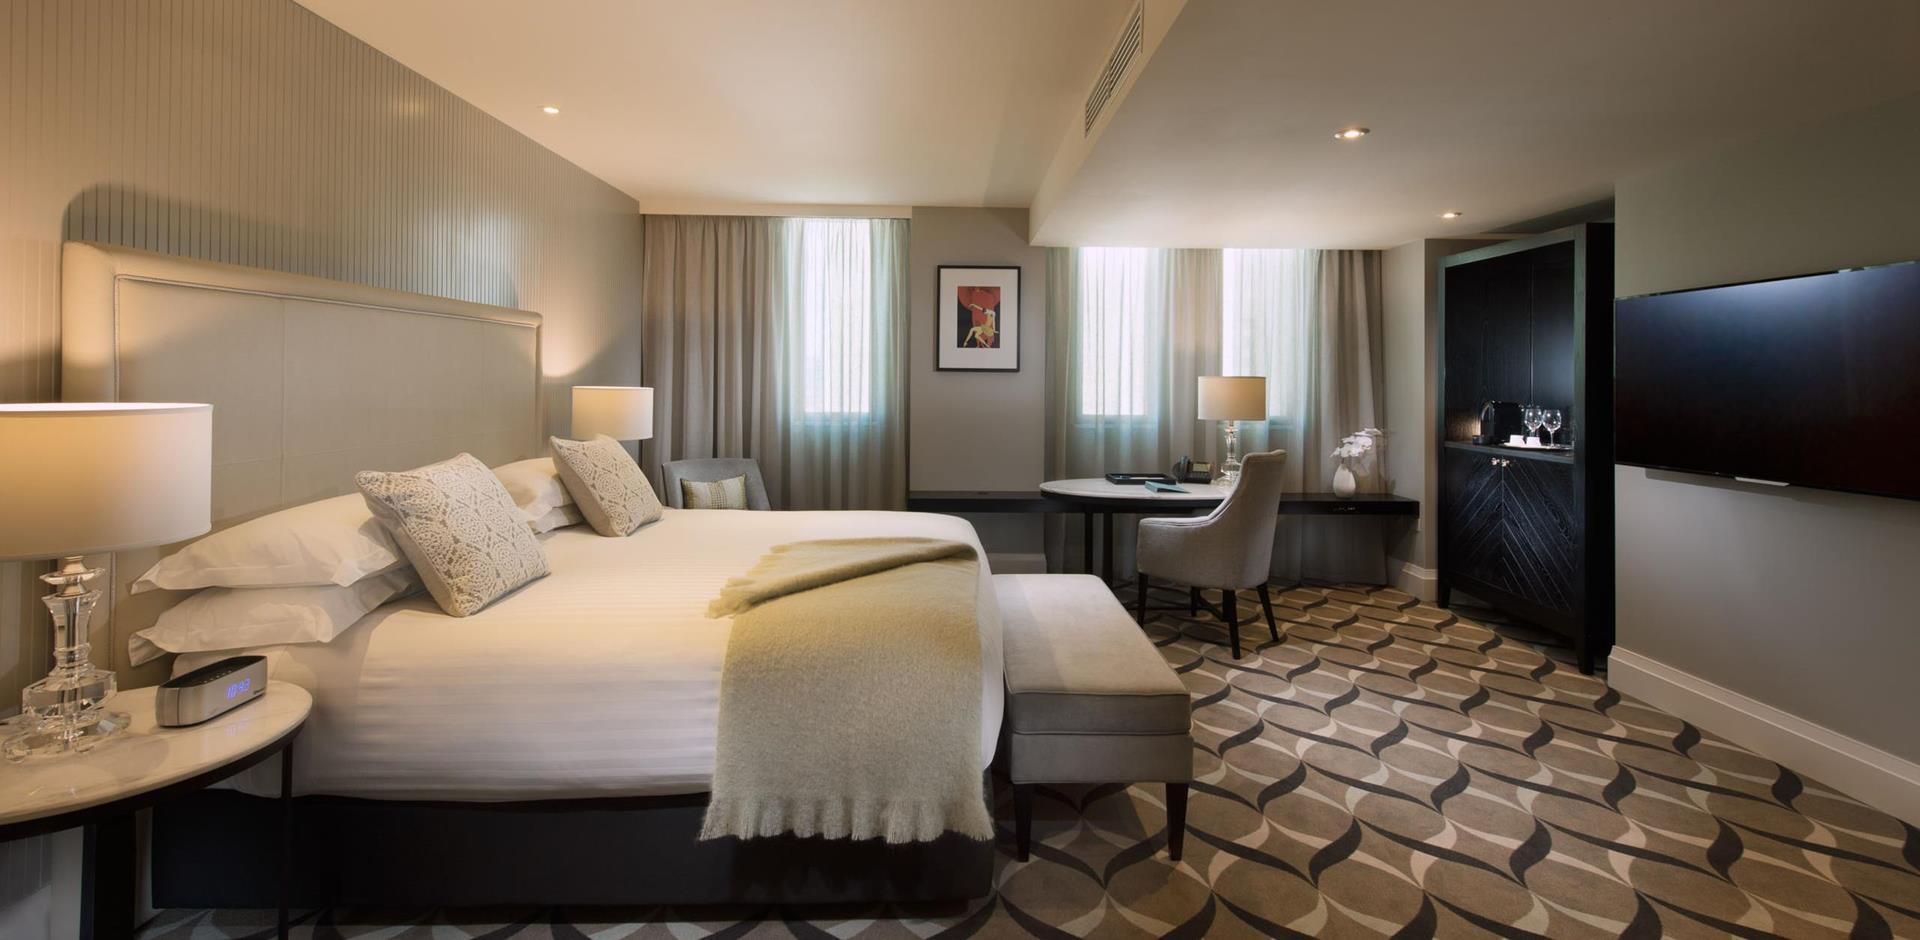 Bedroom, Mayfair Hotel, Australia